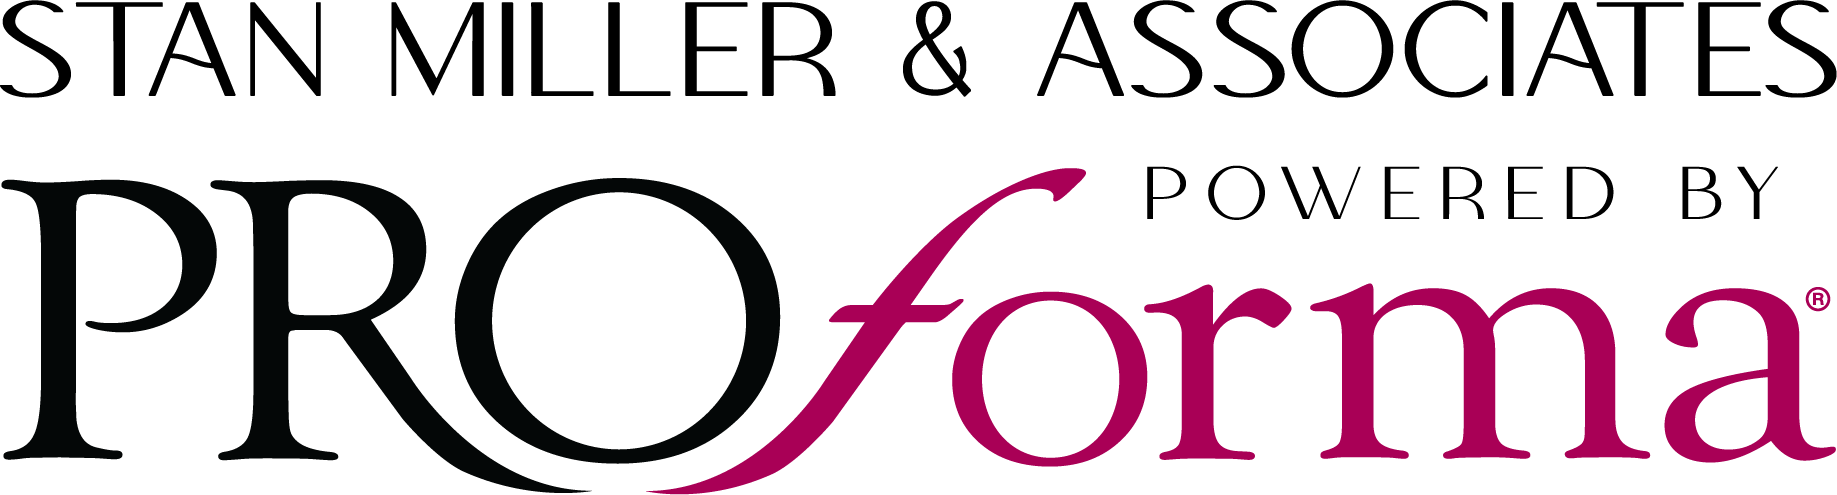 Stan Miller & Associates LLC powered by Proforma's Logo